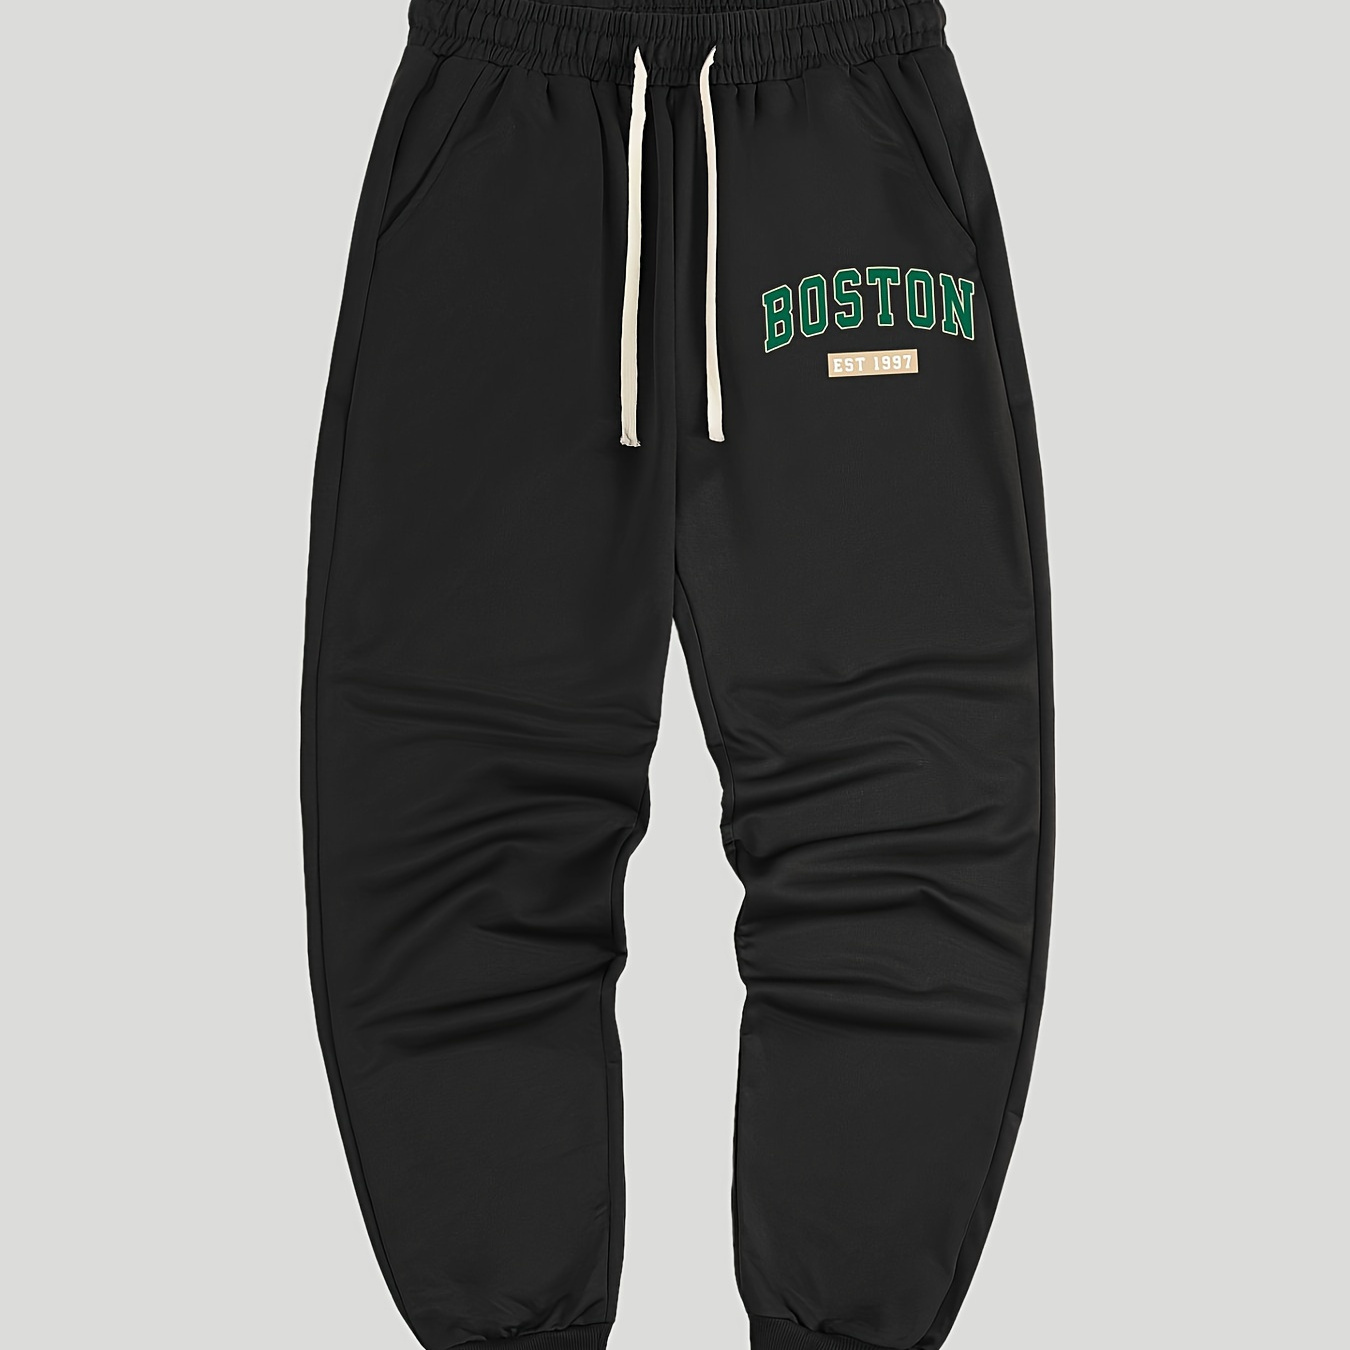 

Boston Print Men's Pants Drawstring Sweatpants Loose Casual Trousers For Spring Autumn Running Jogging